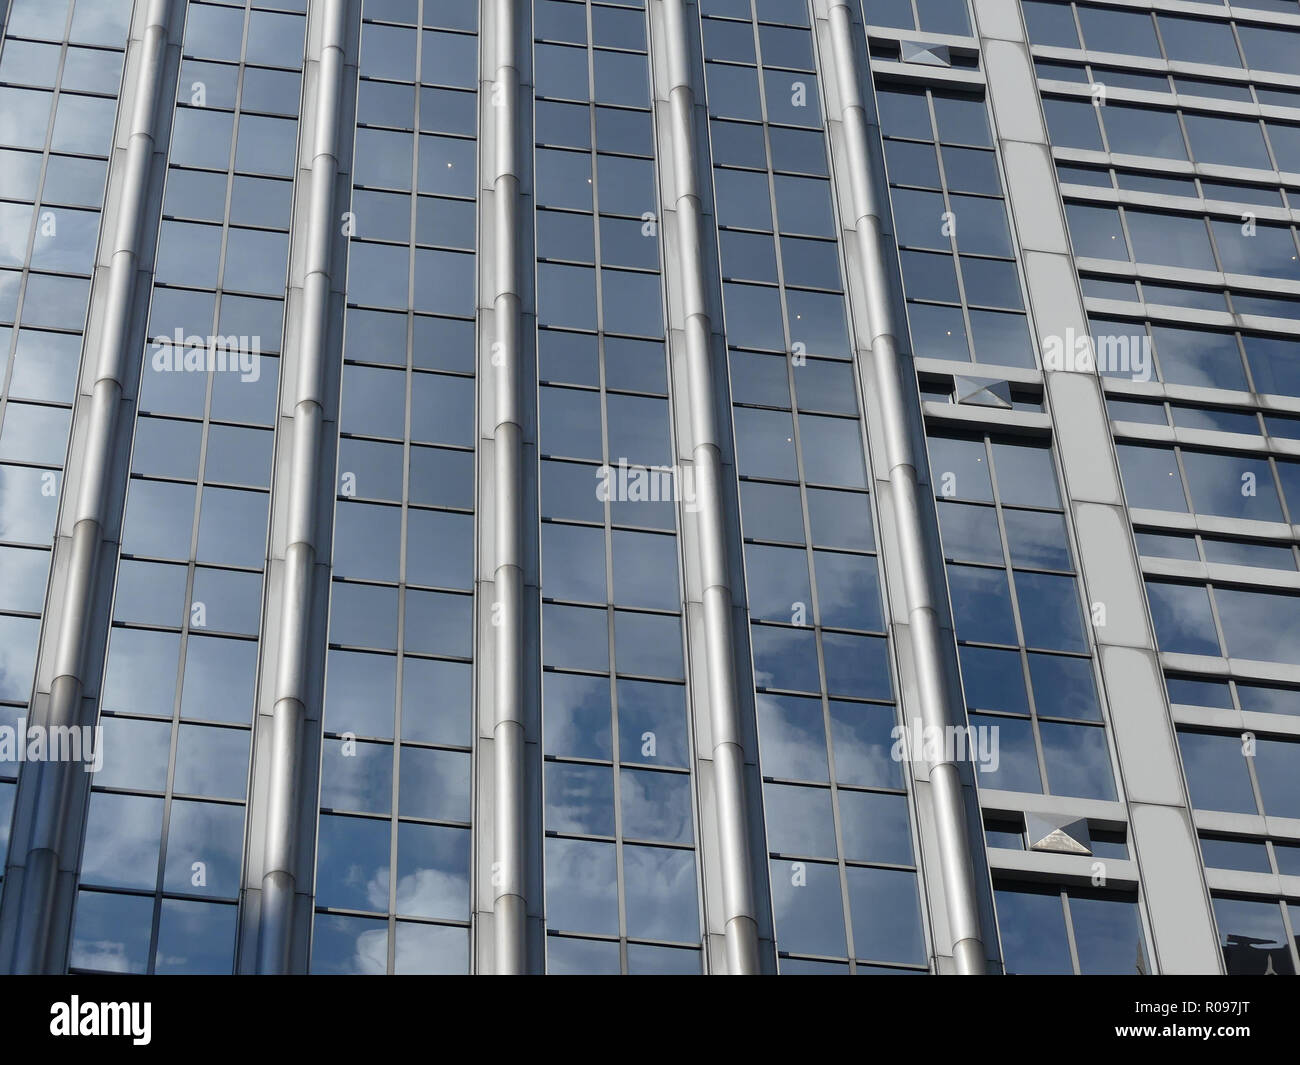 SKYSCRAPER WINDOWS in Washington D.C. Photo: Tony Gale Stock Photo